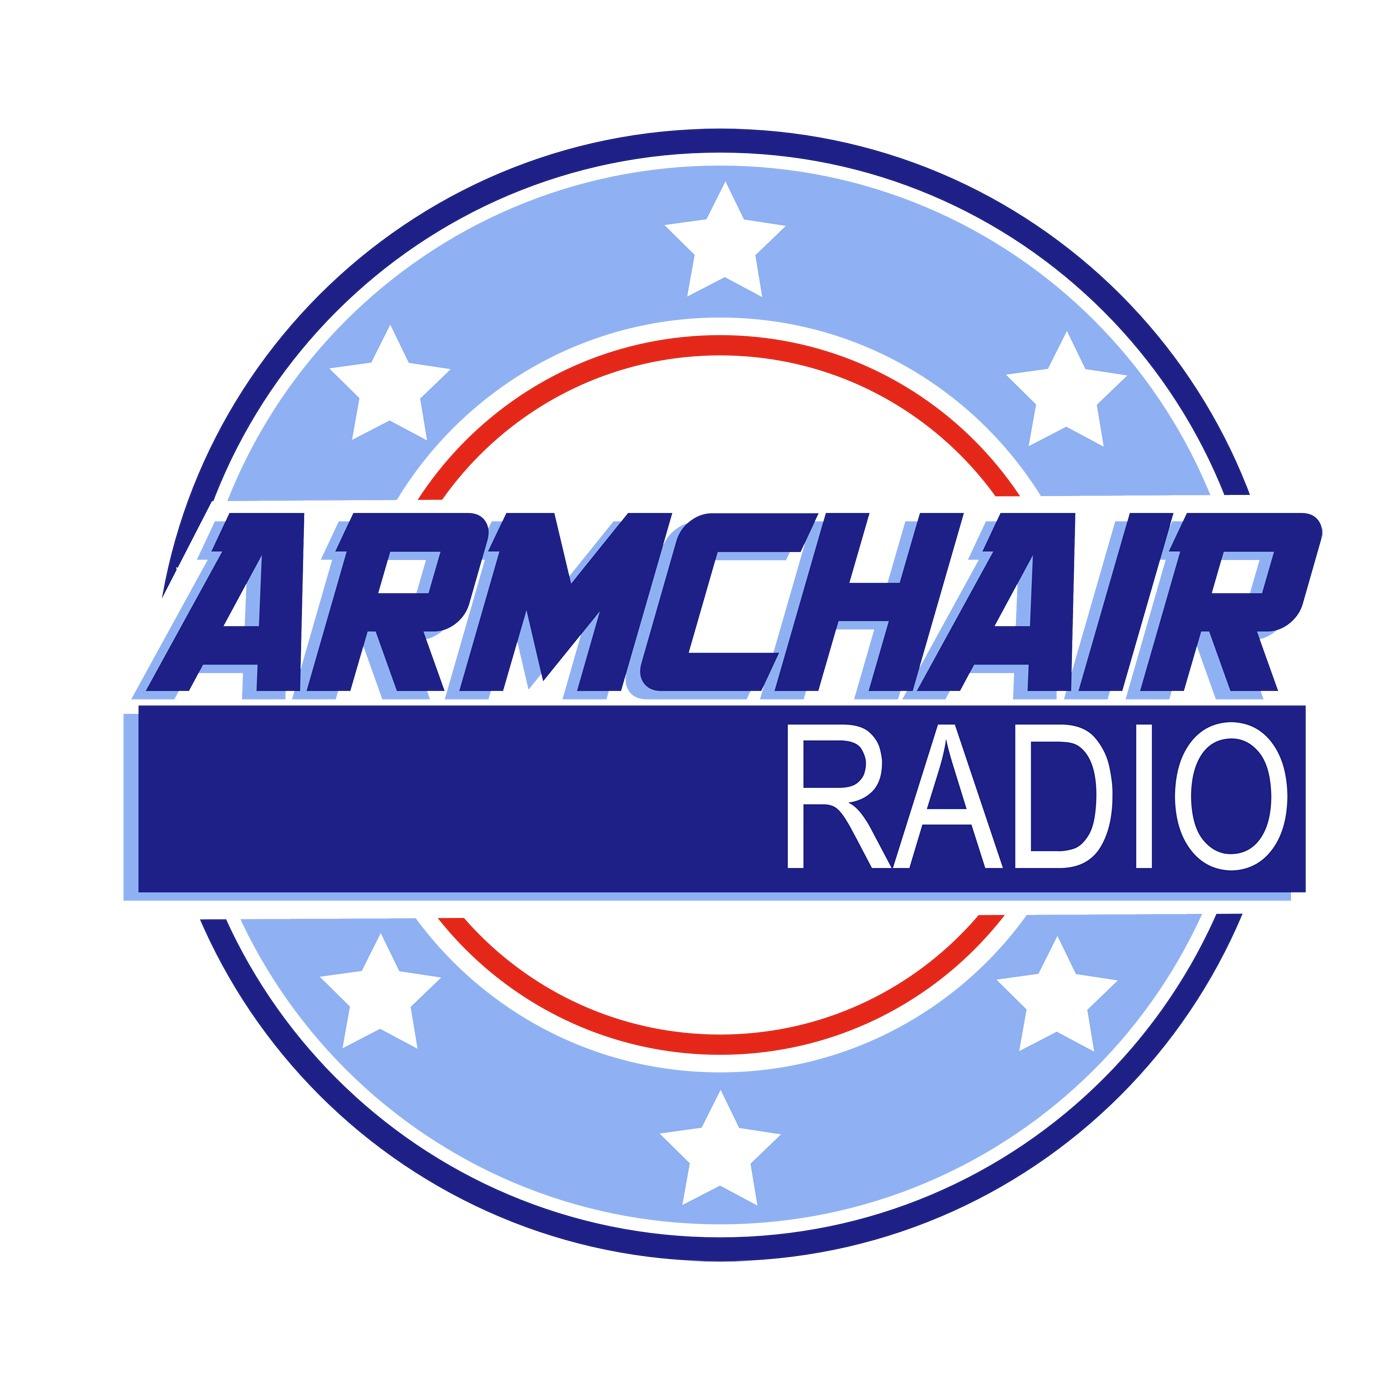 Armchair Radio